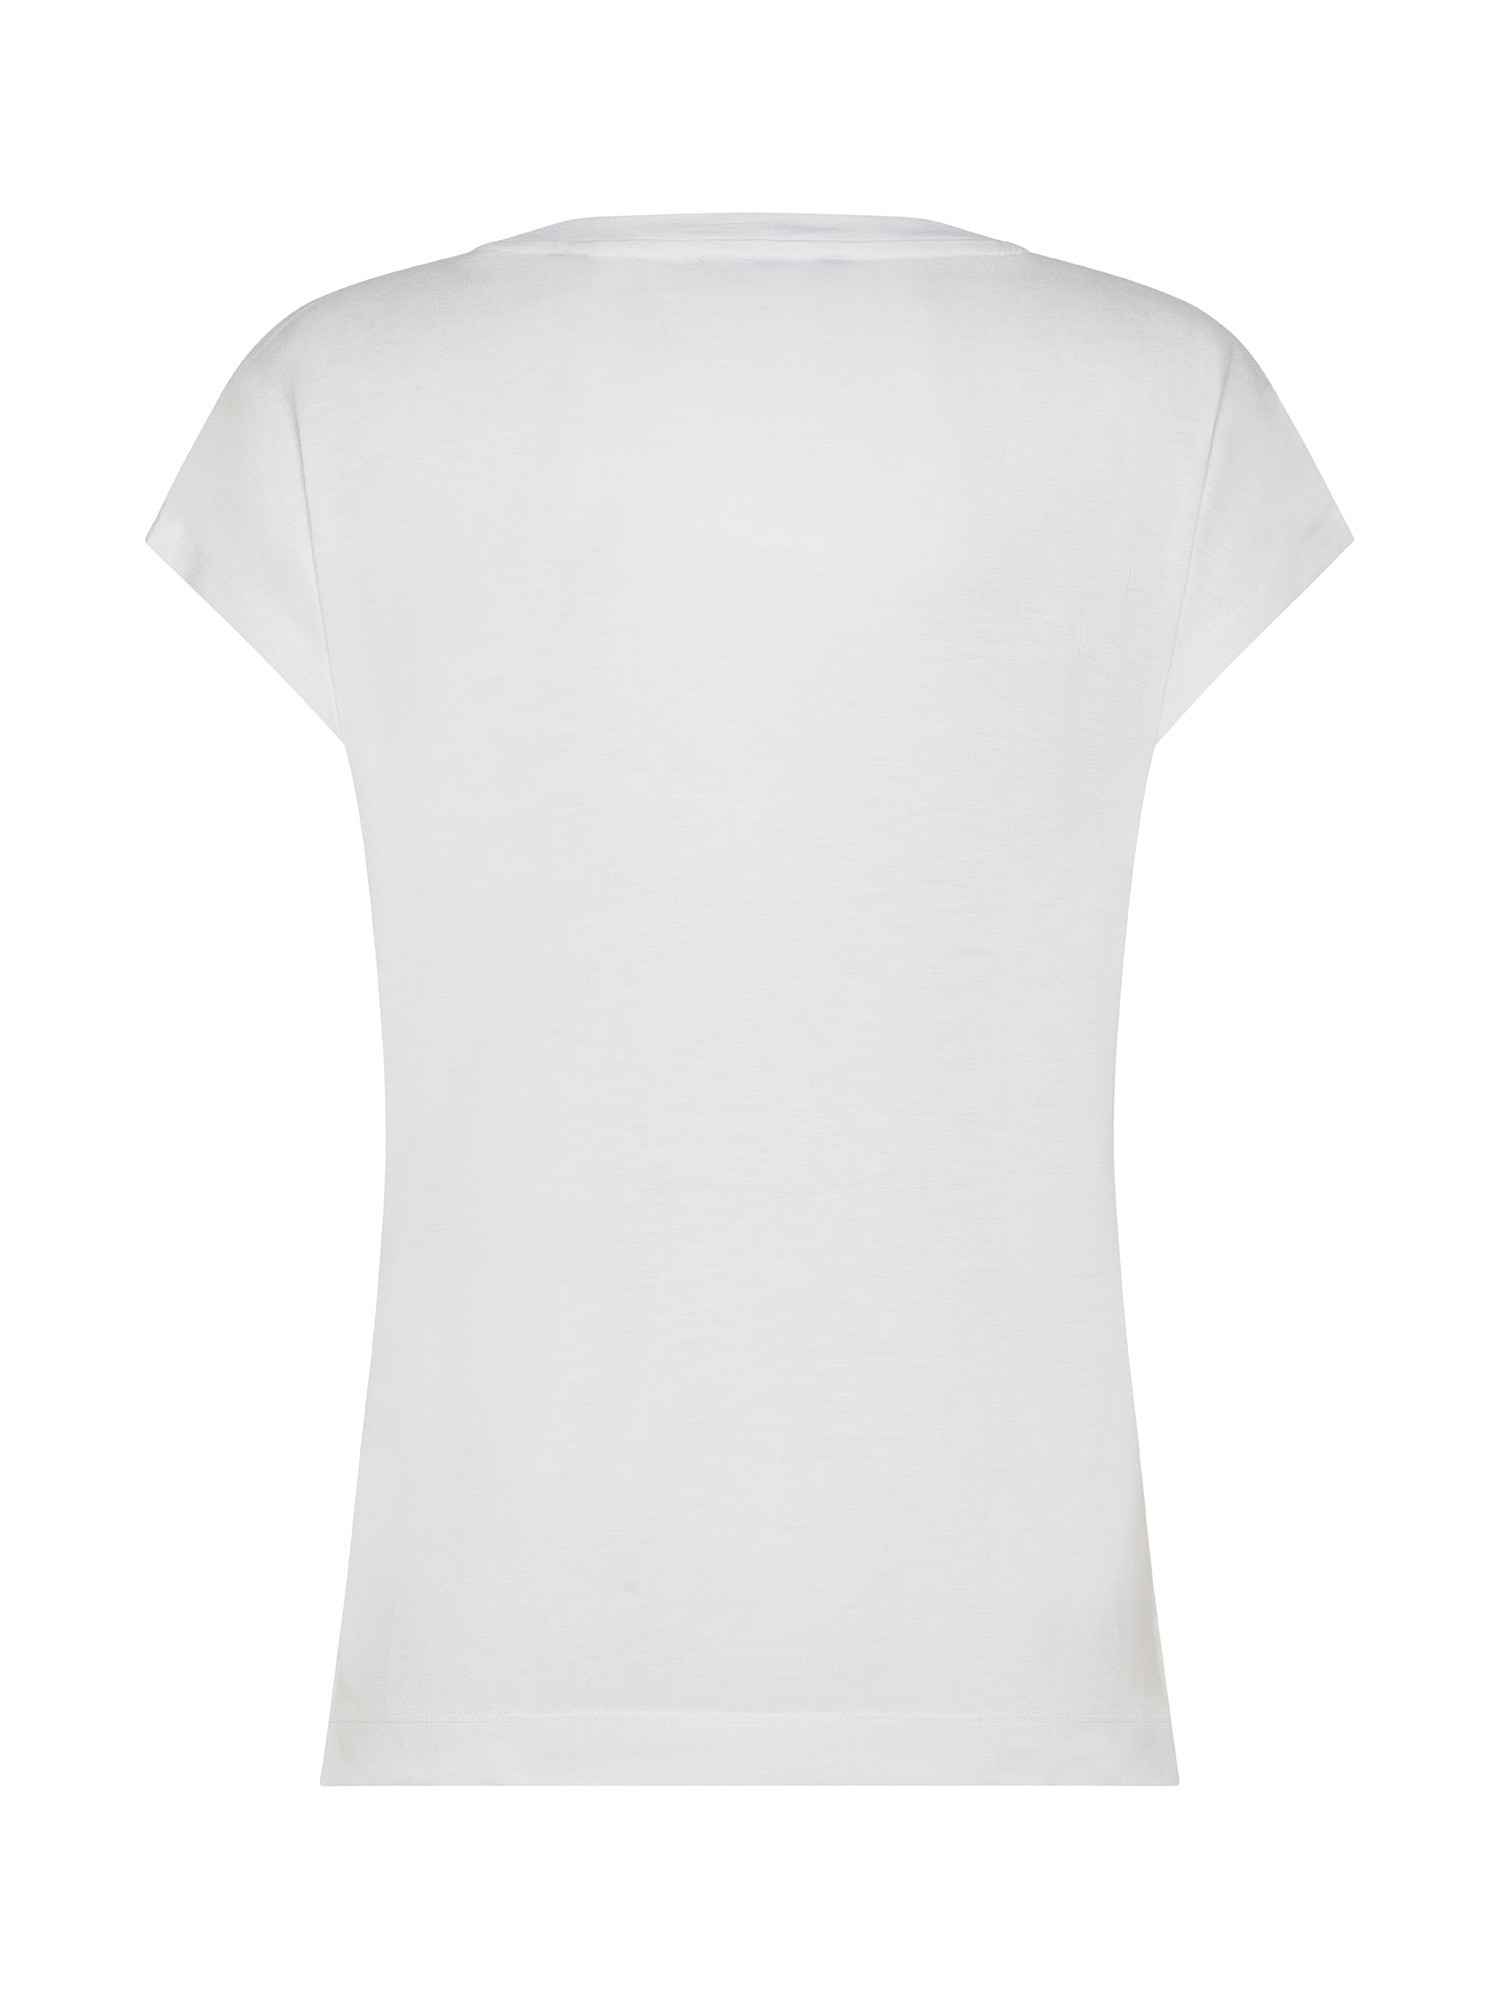 Esprit - T-shirt con scritta con paillettes, Bianco, large image number 1